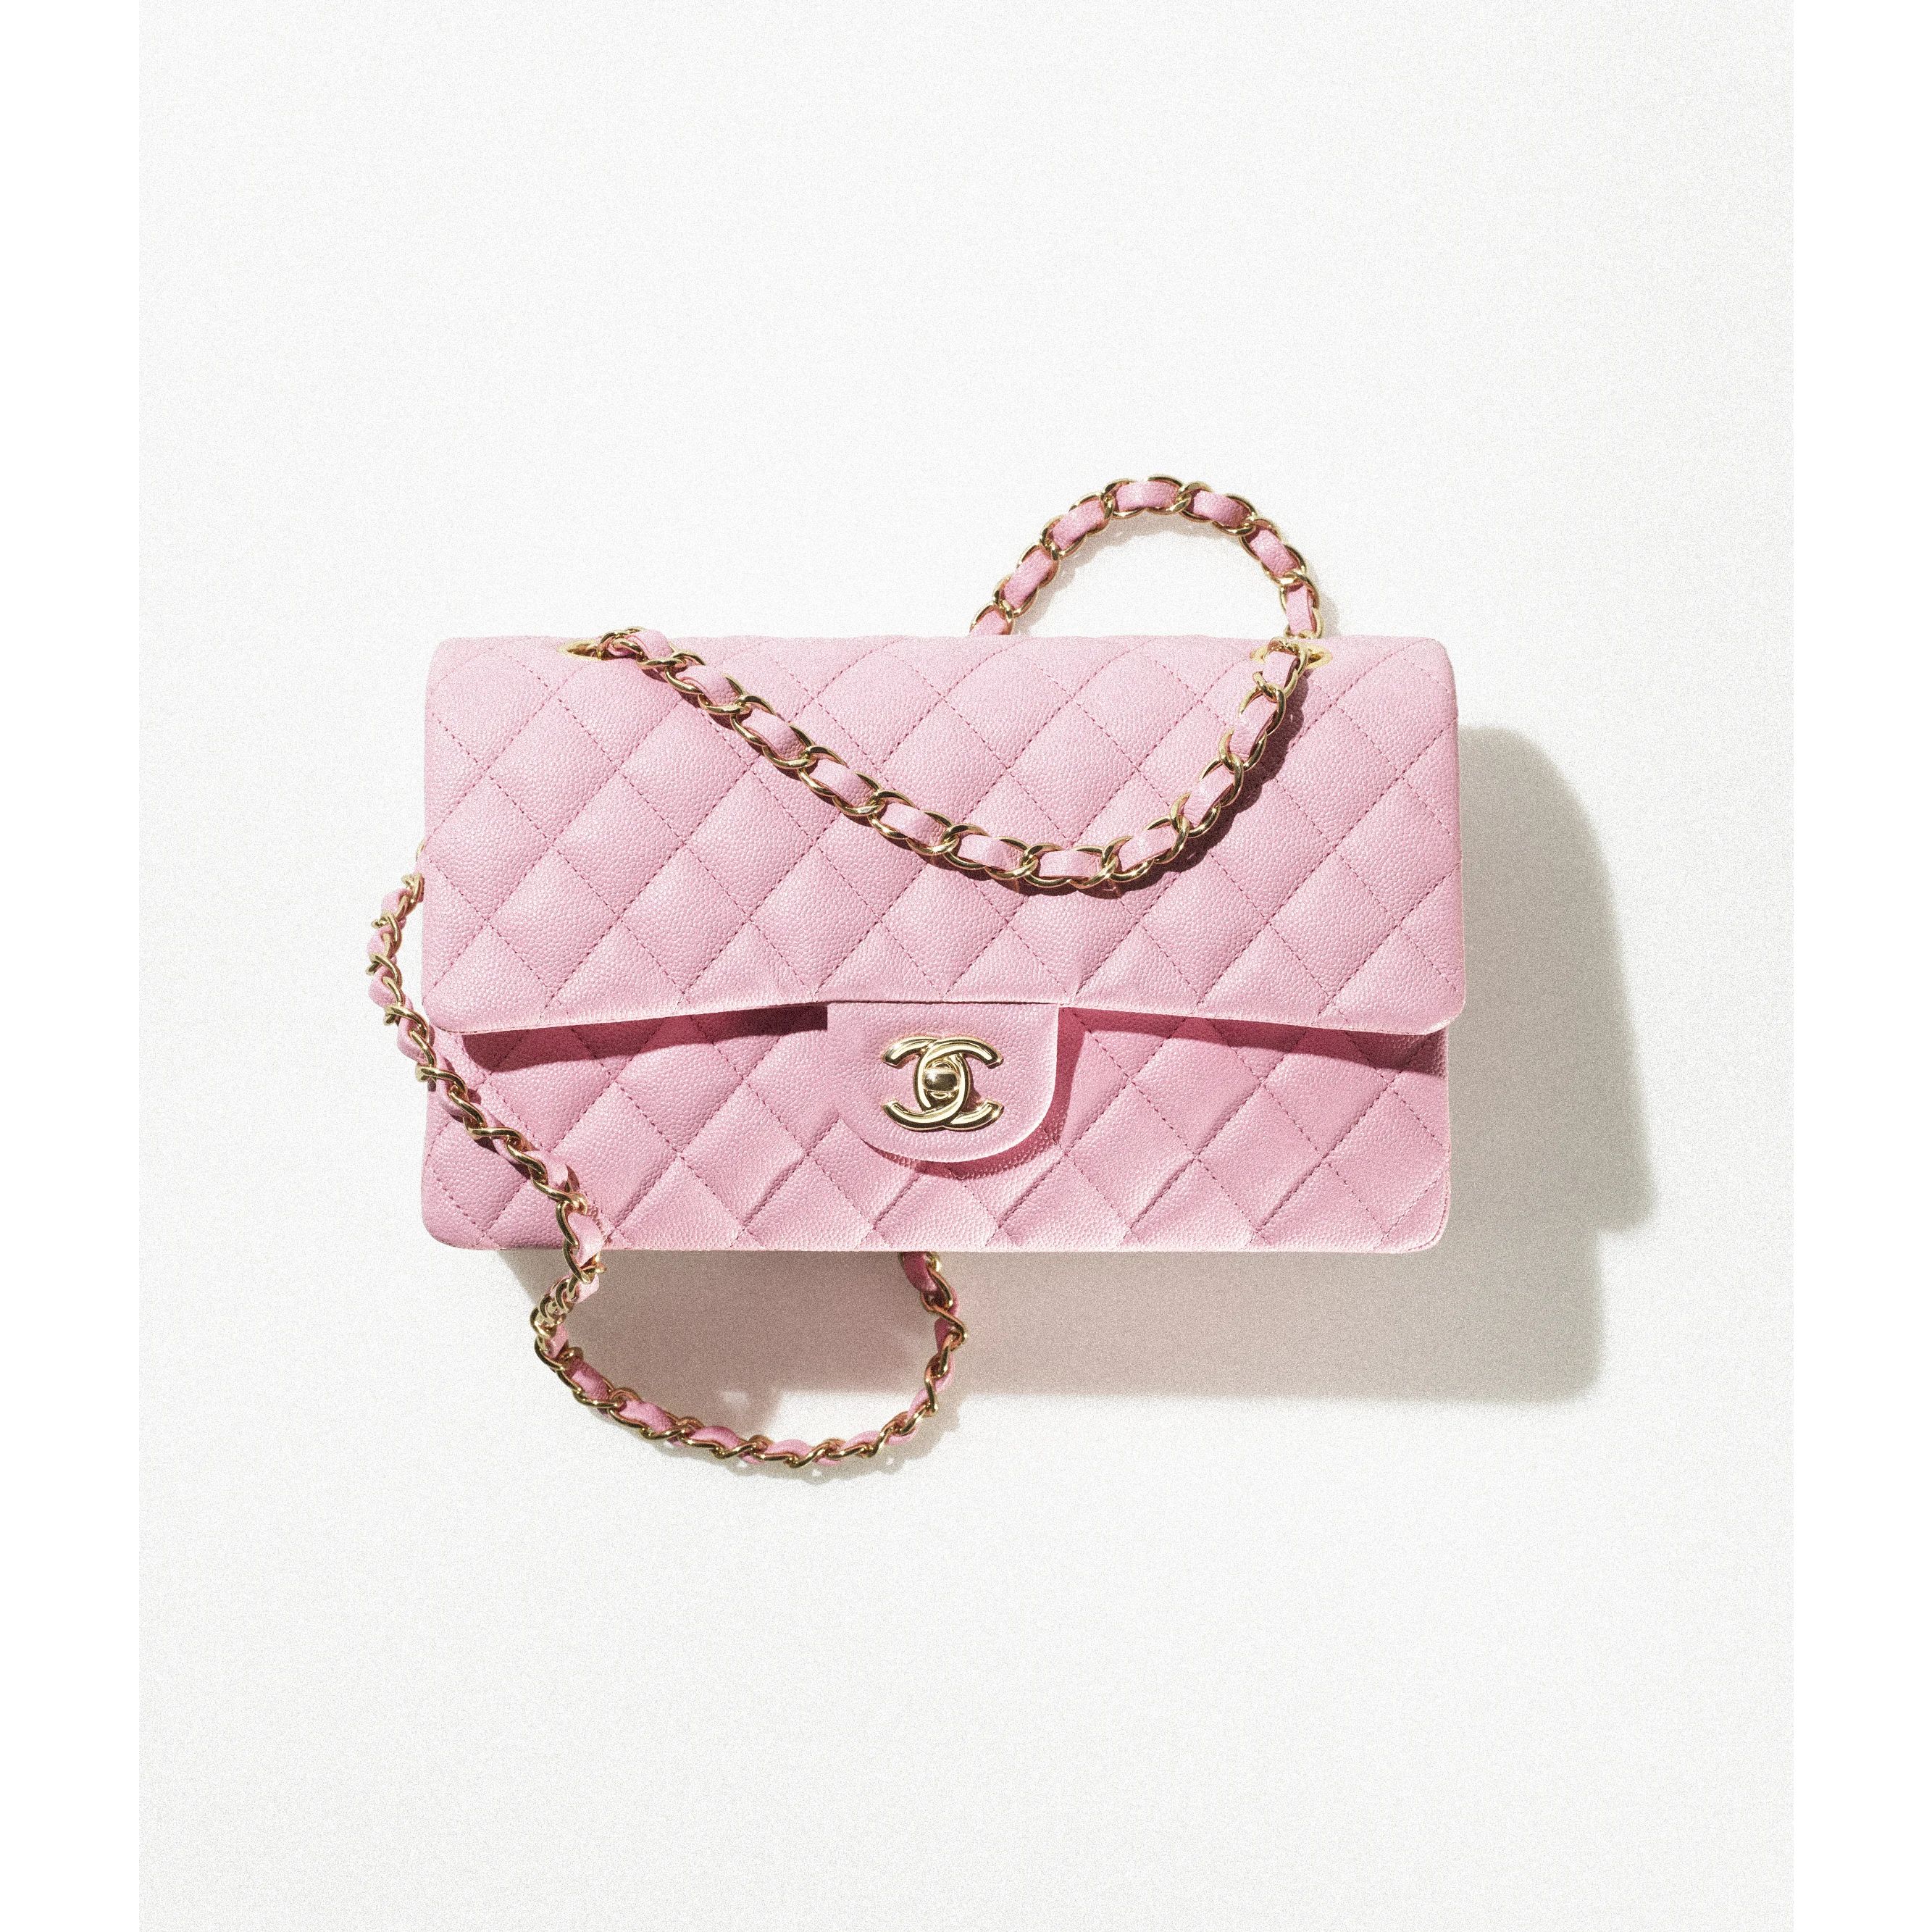 Classic Handbag - Grained shiny calfskin & gold-tone metal — Fashion | CHANEL | Chanel, Inc. (US)